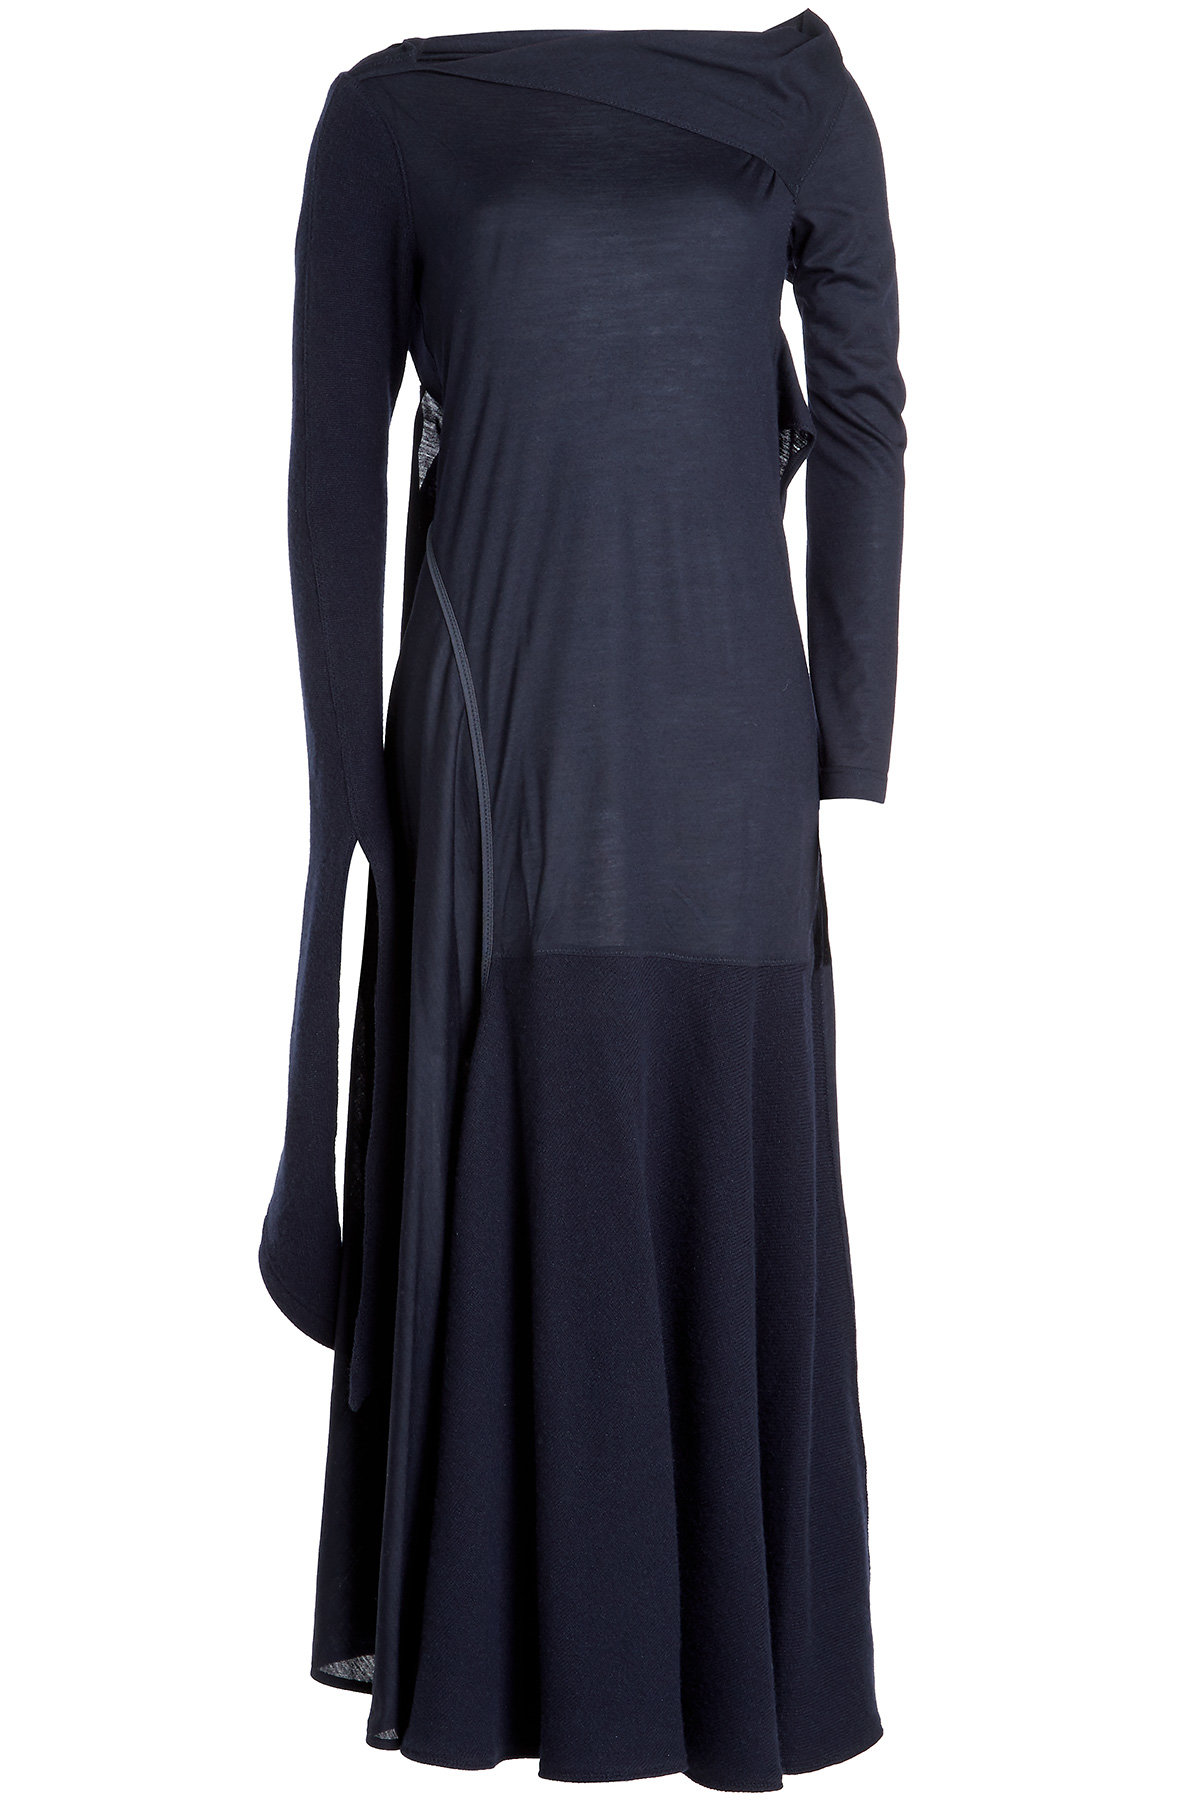 Victoria Beckham - Asymmetric Virgin Wool Dress with Cashmere